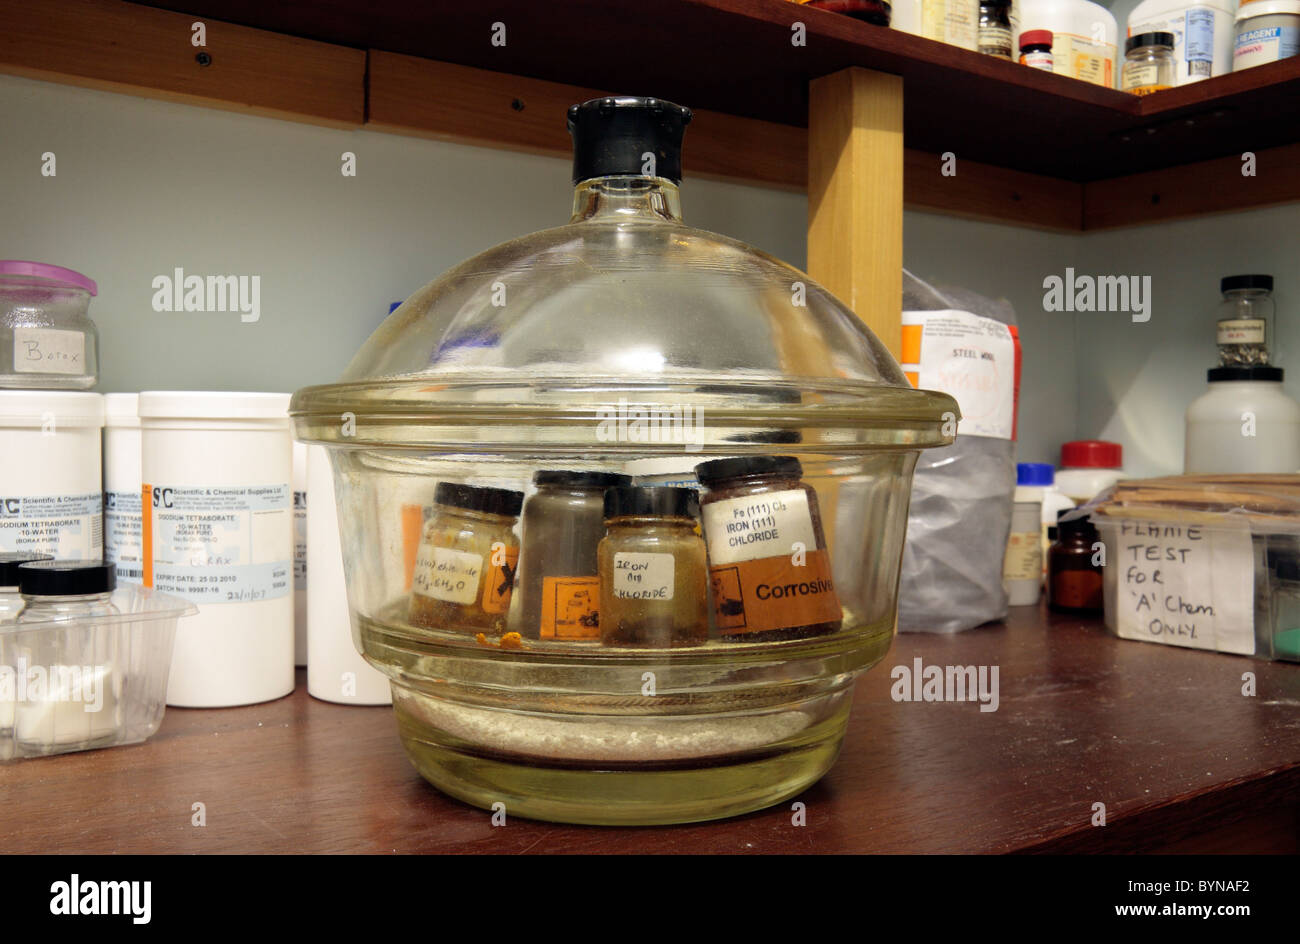 Großen verschlossenen Behältnis (Exsikkator) mit den stark korrosiven Eisen-III-Chlorid in einer Schule Chemikalienlager, London, UK. Stockfoto